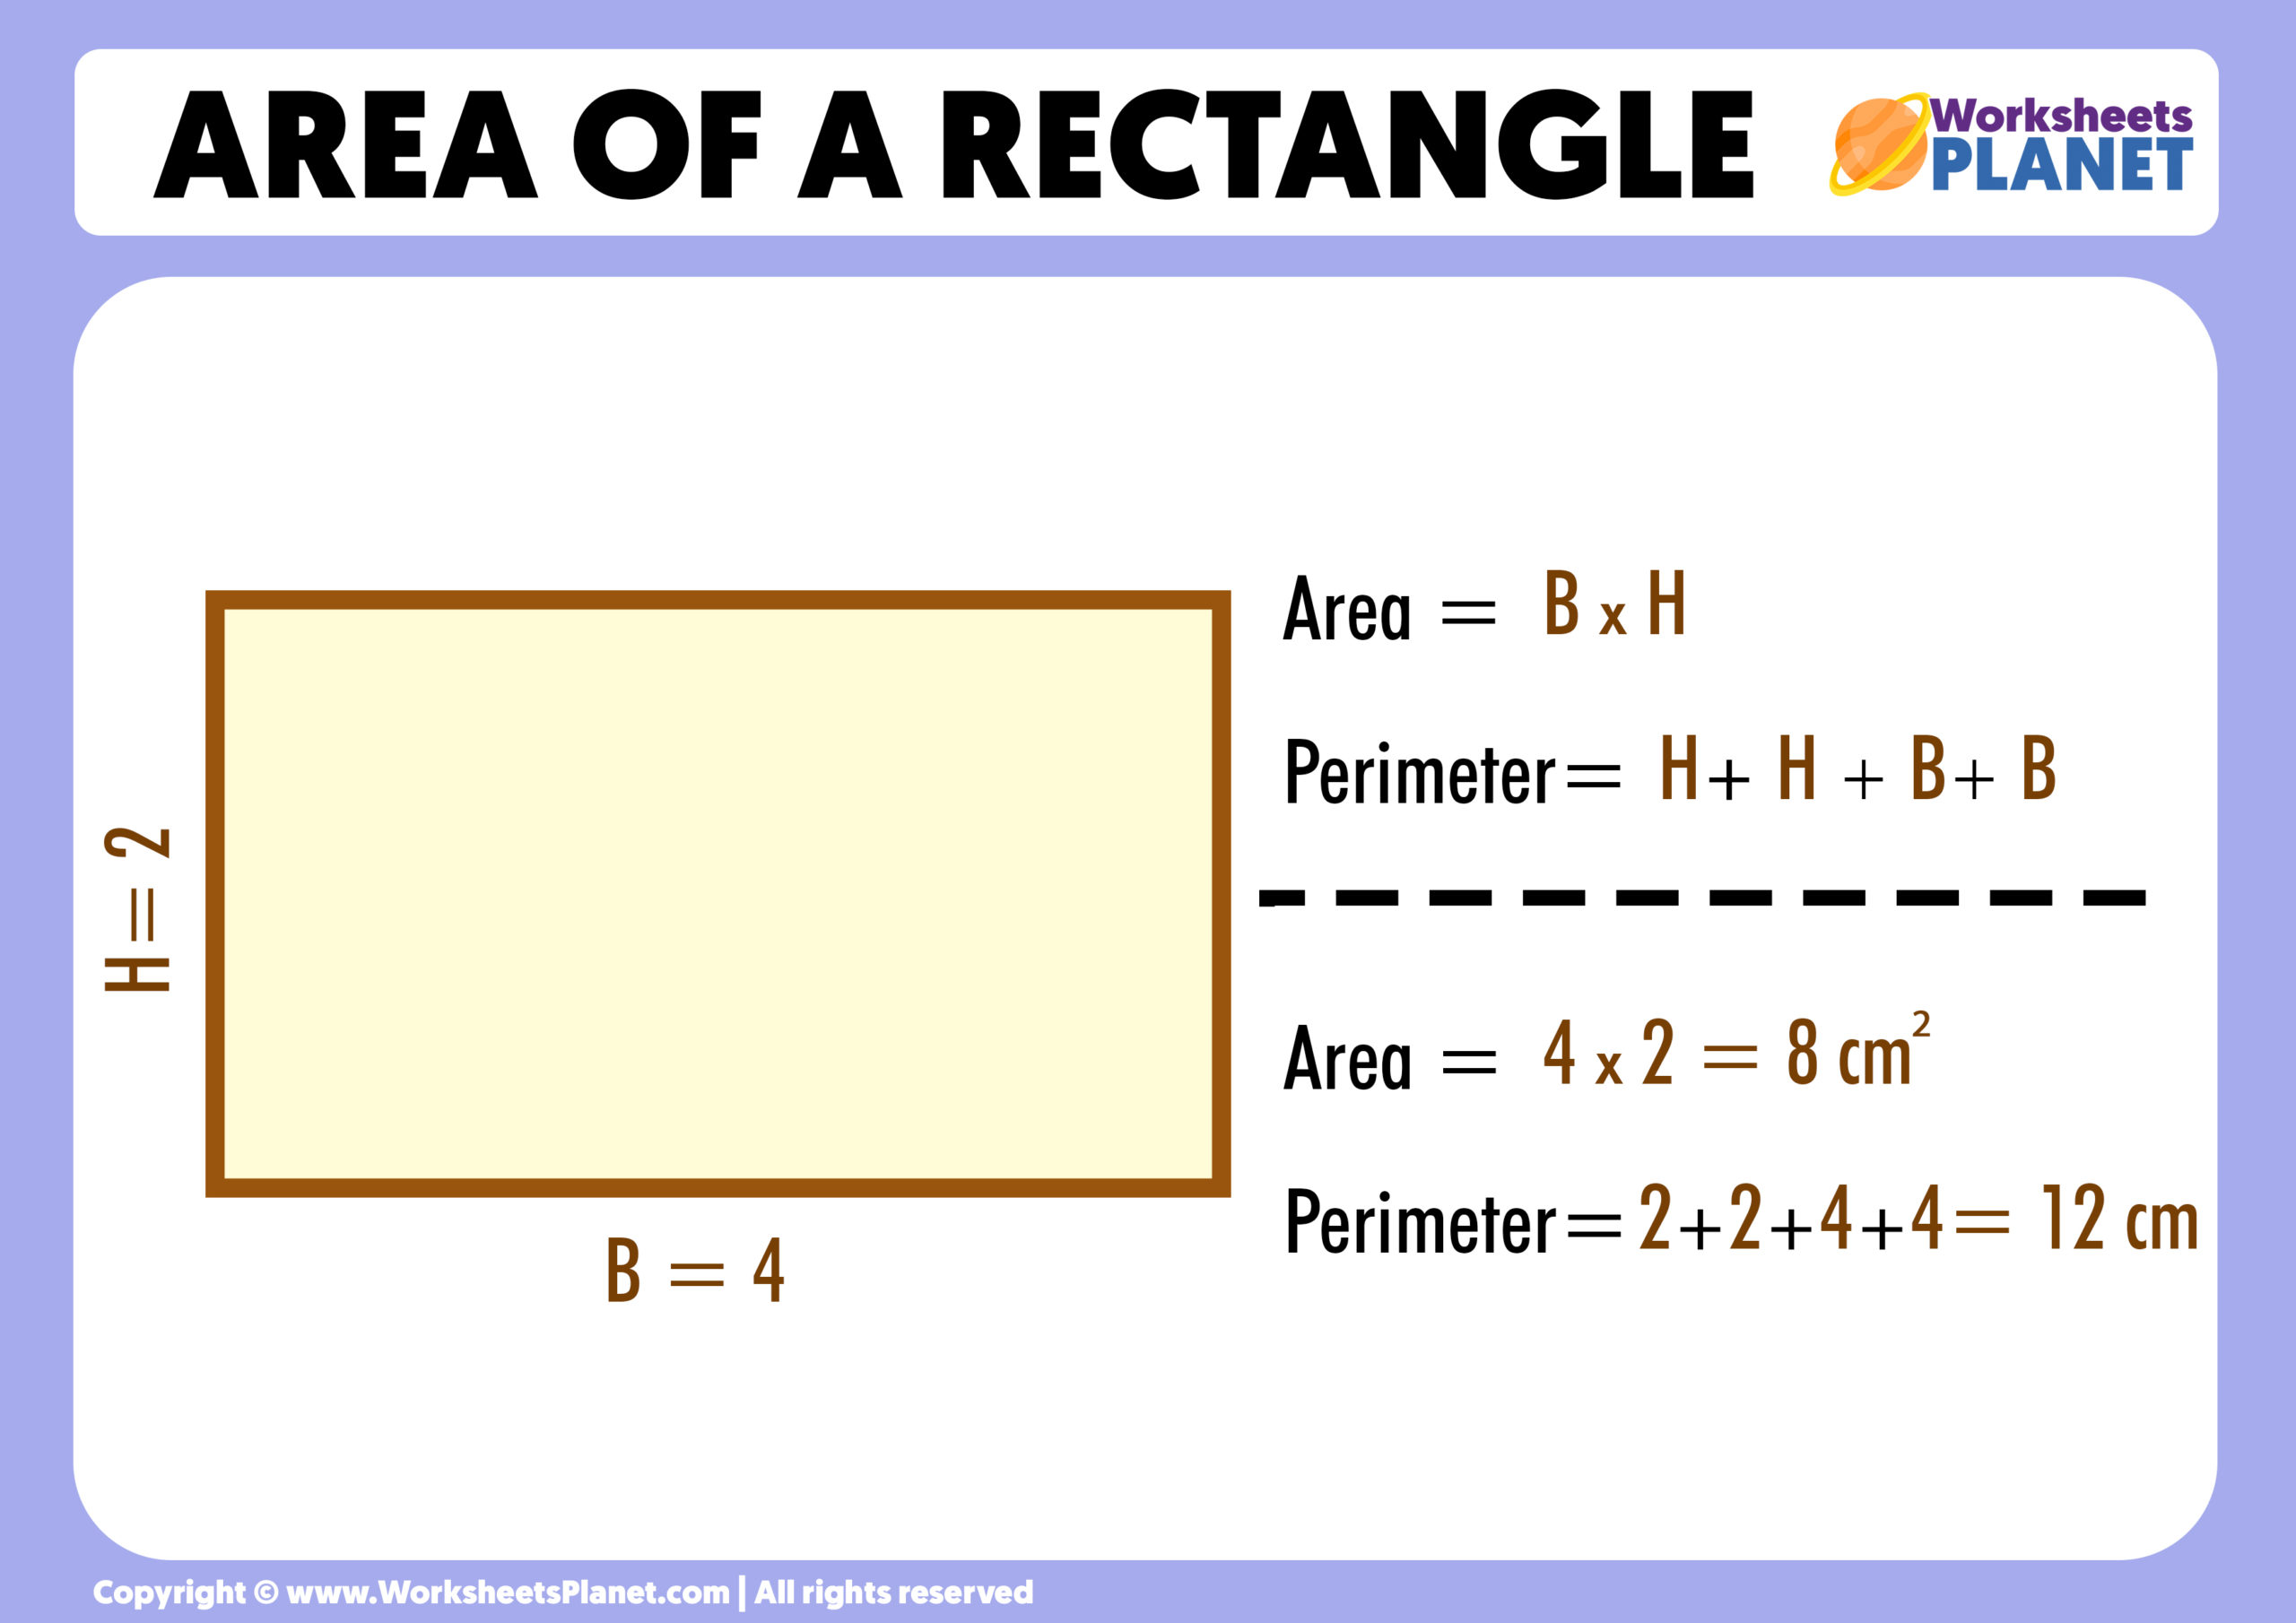 area-of-a-rectangle-formula-example